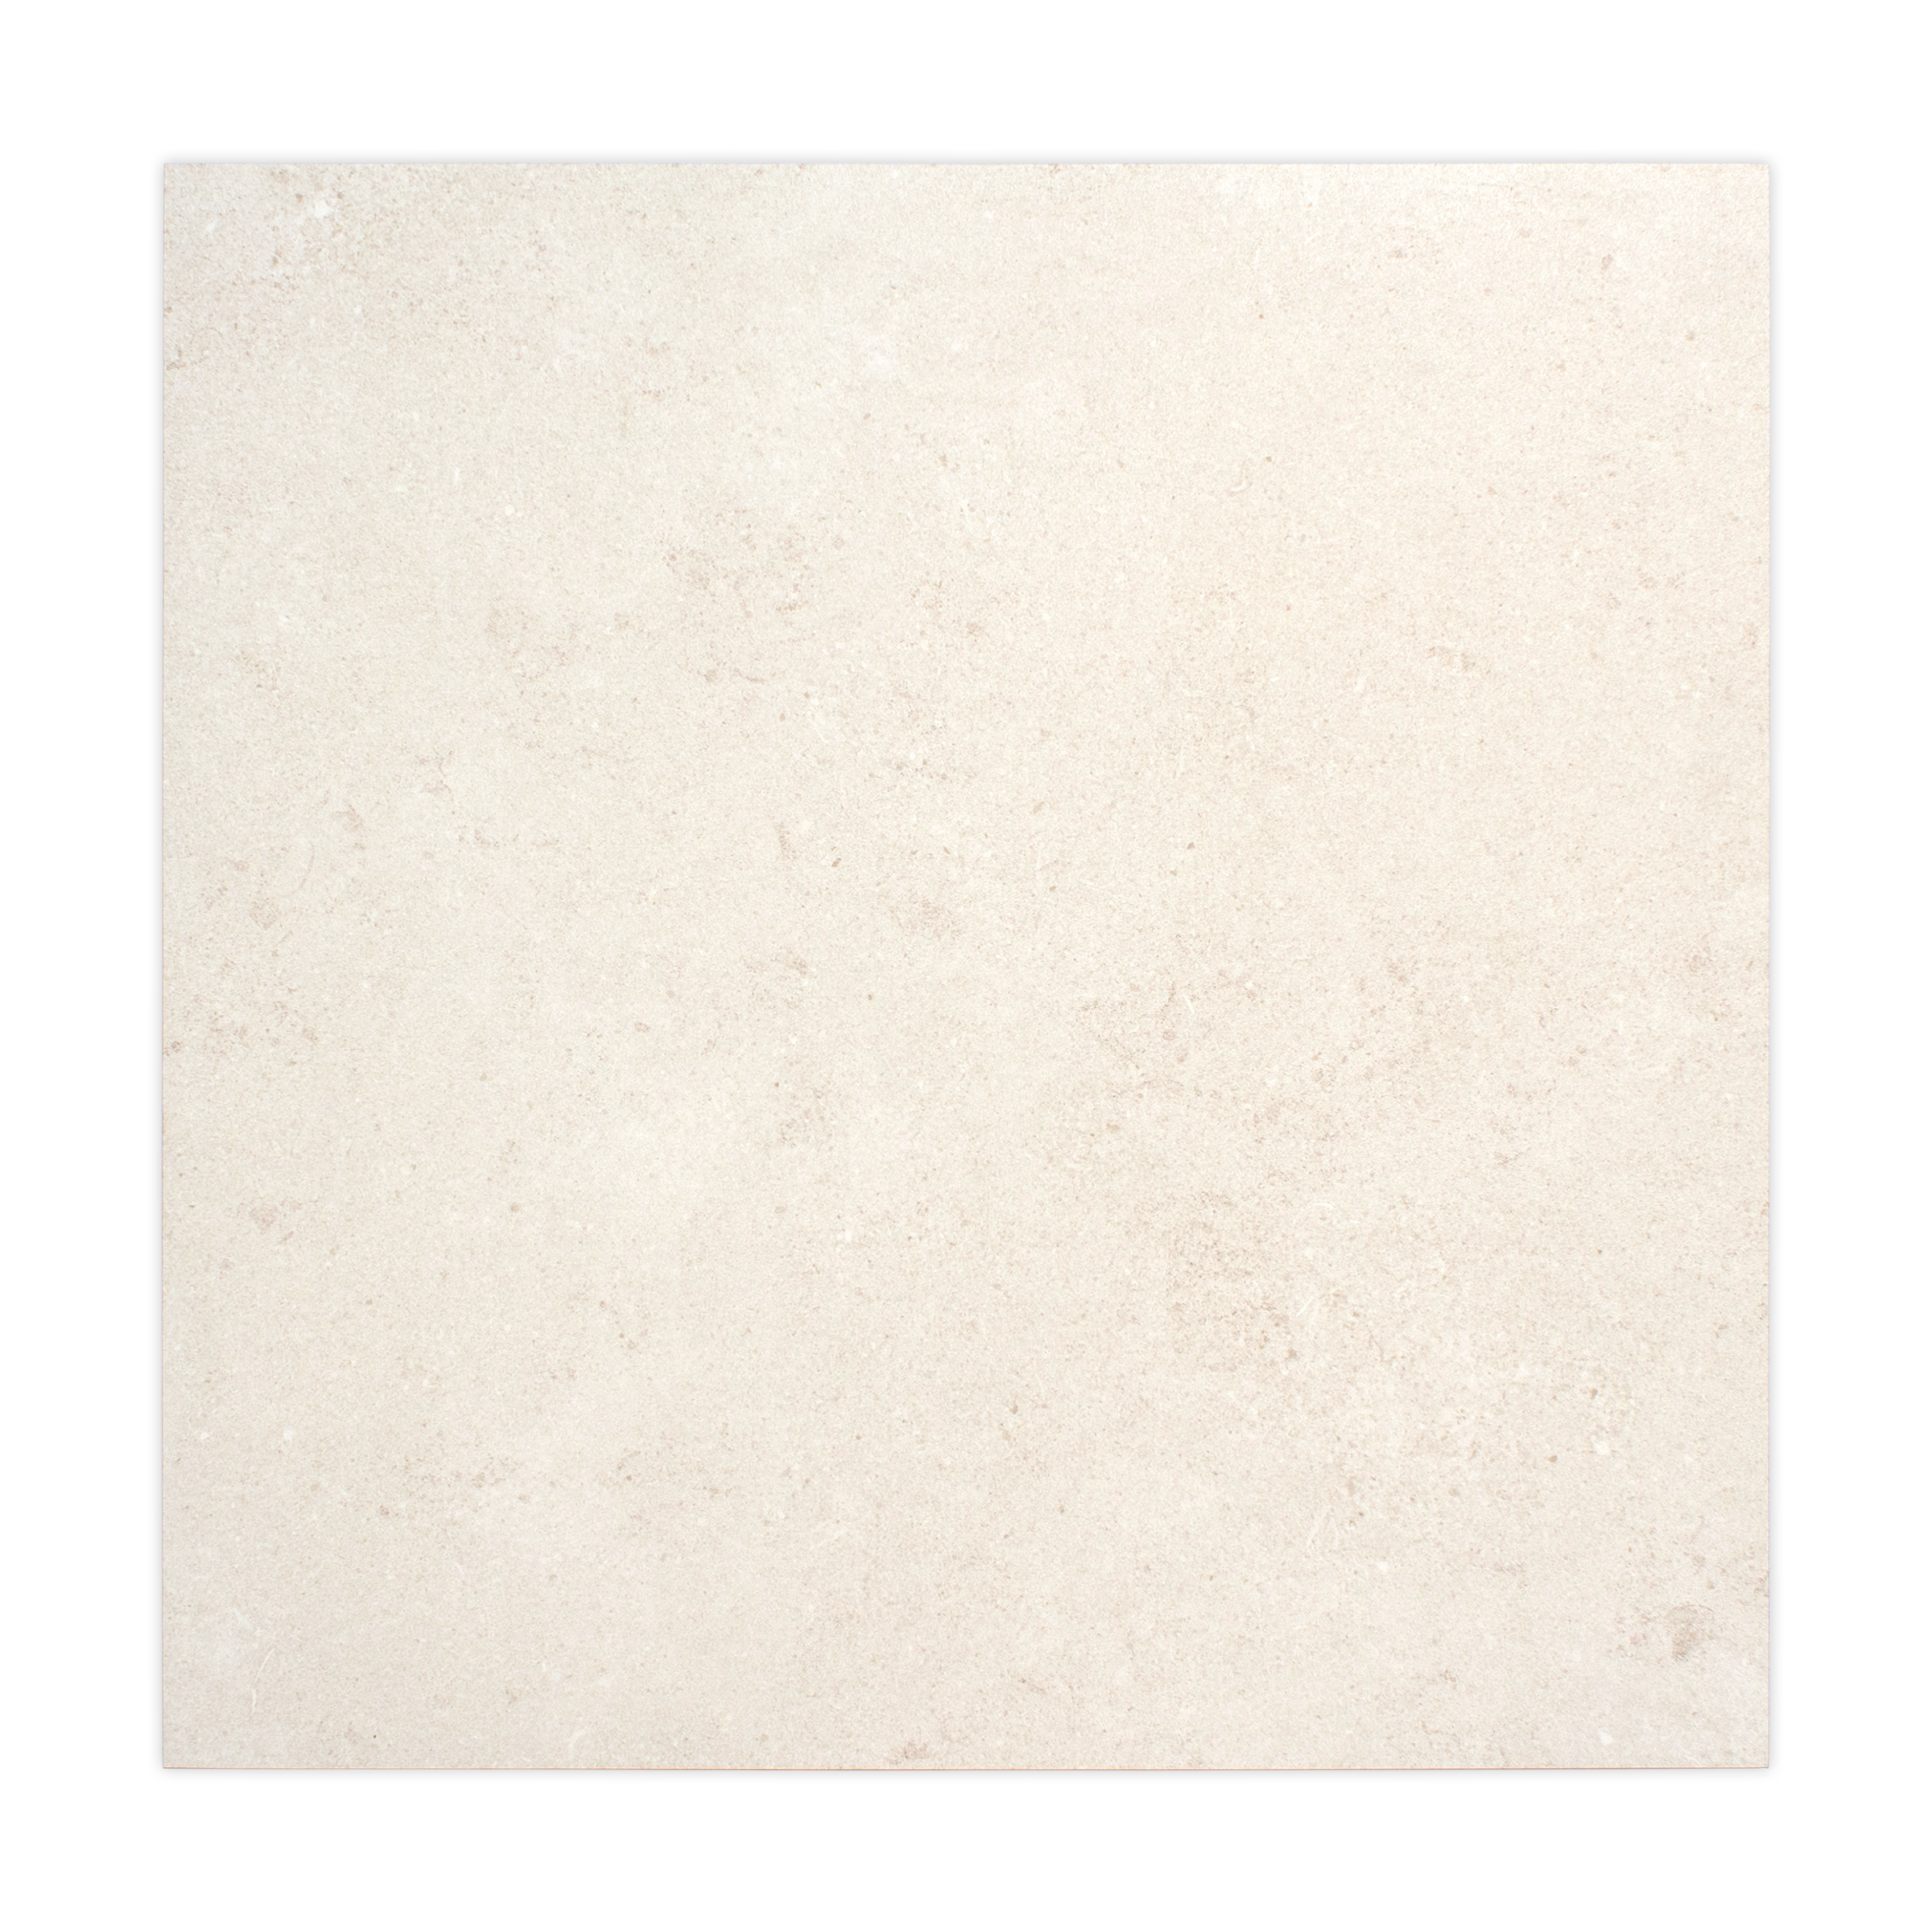 Limestone Linen White Rectified Porcelain Tile 24x24